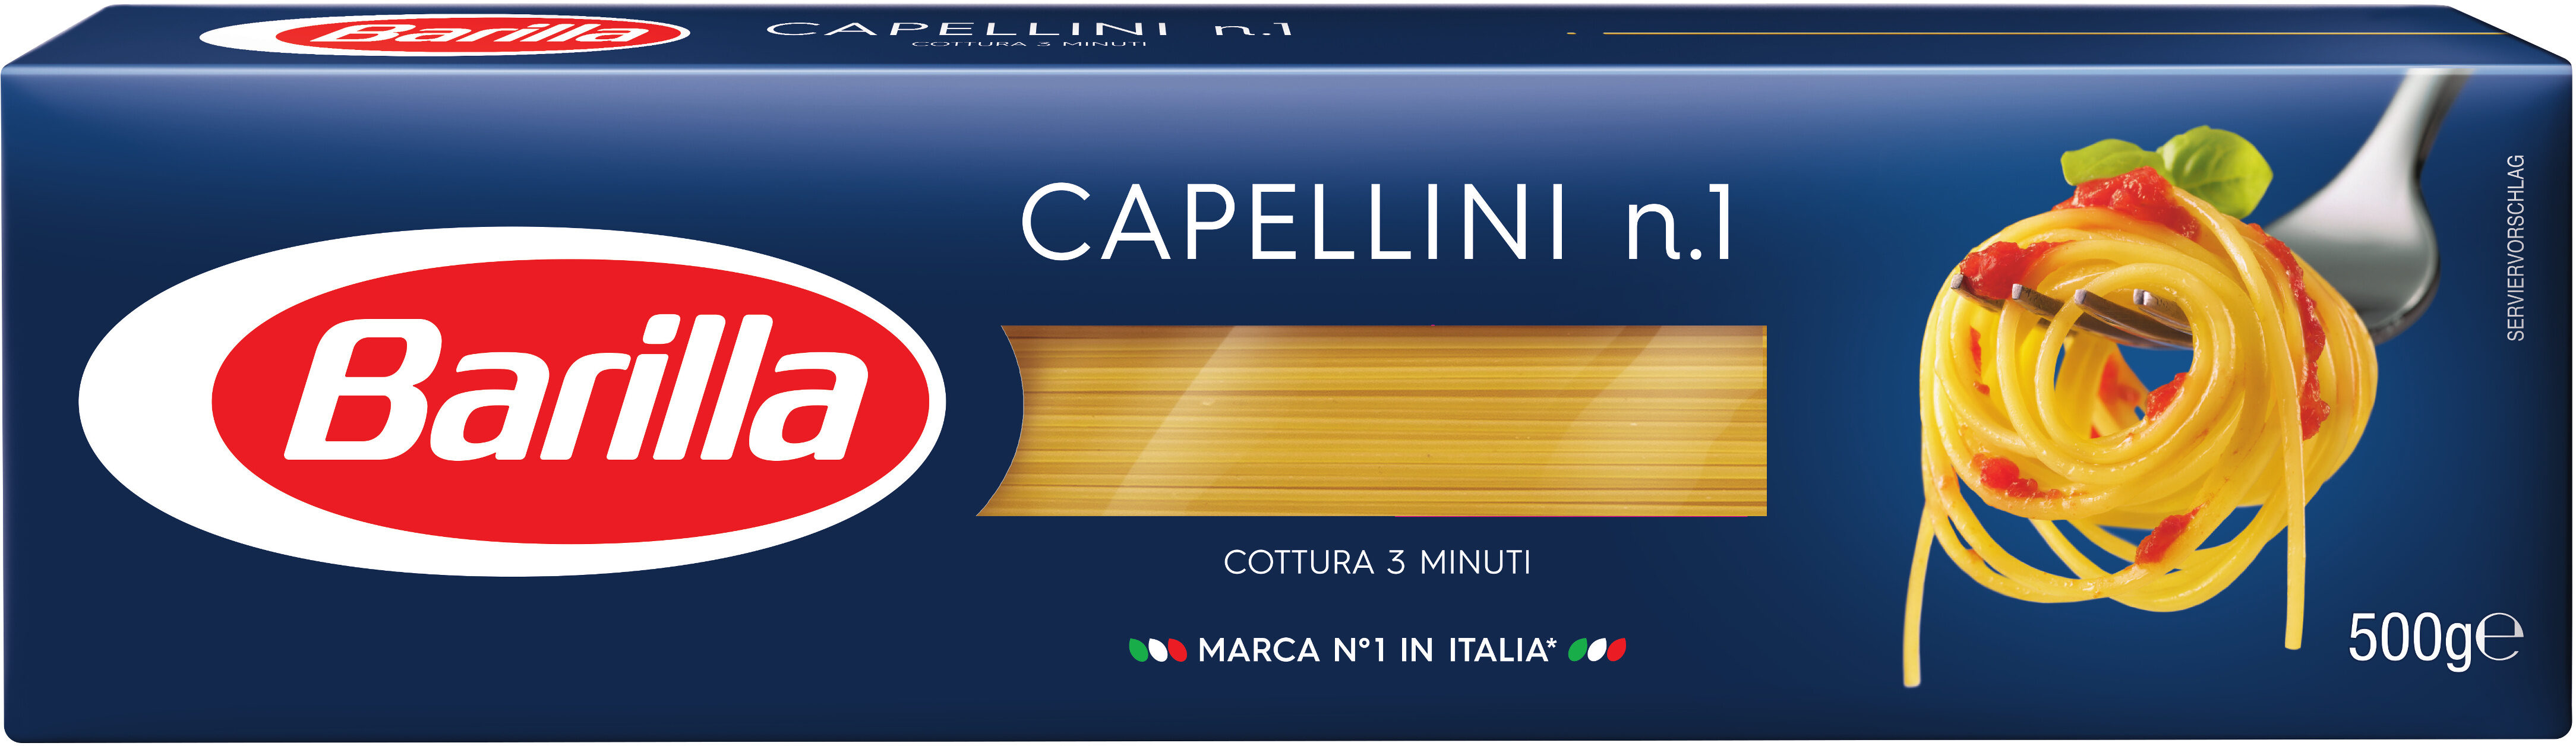 Capellini n.1 - Product - de